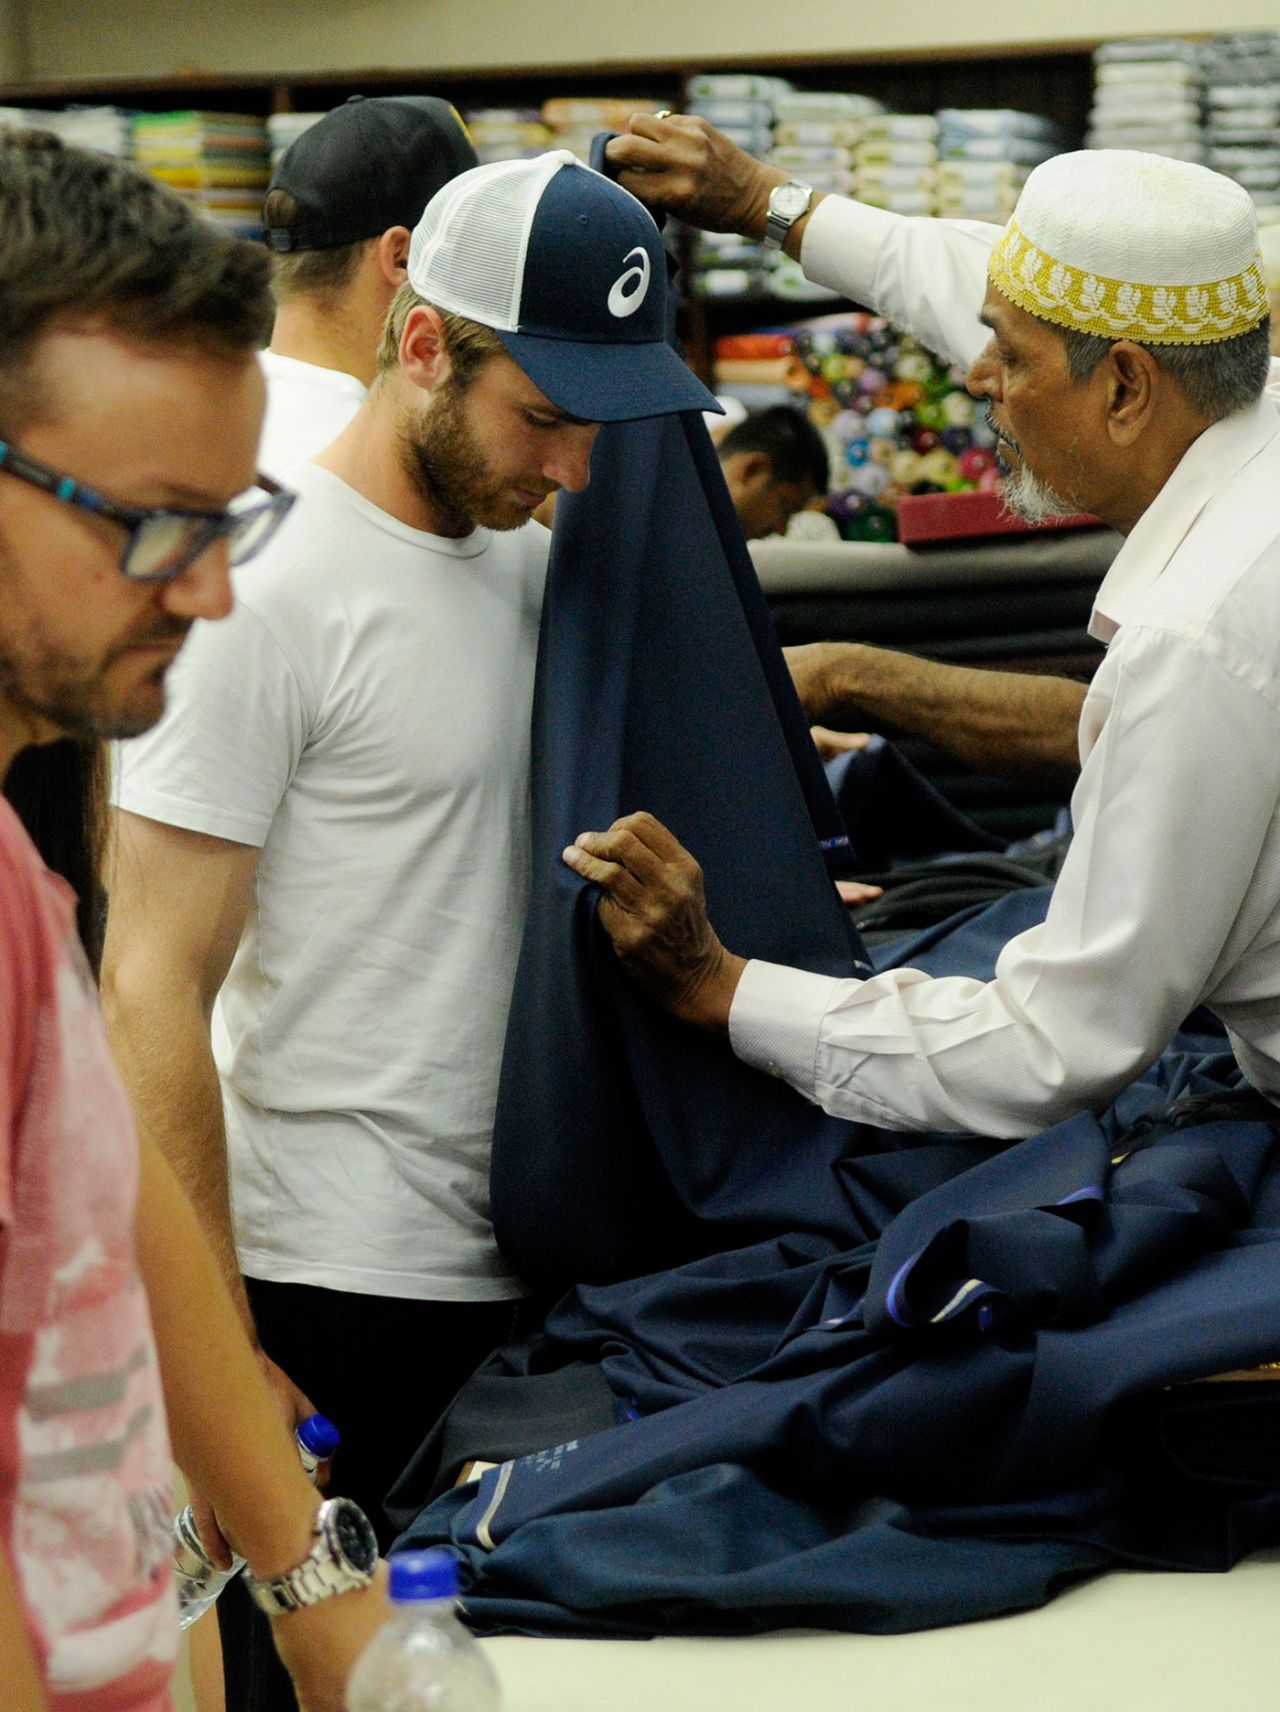 Kane Williamson looks at material for a suit in a men's tailoring establishment in Kolkata, September 28, 2016